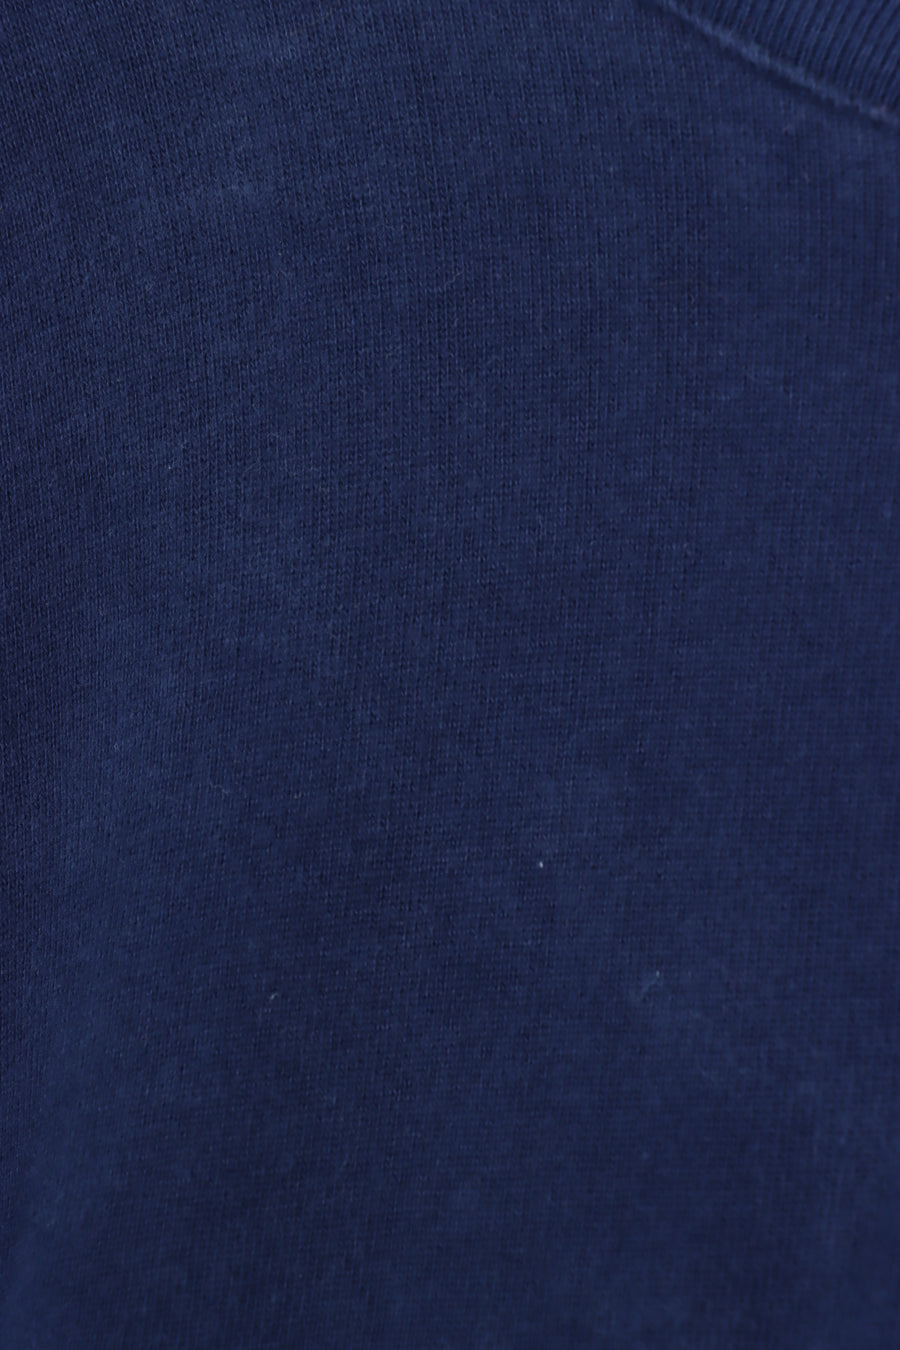 HARLEY DAVIDSON Navy Embroidered Long Sleeve Tee (XL)